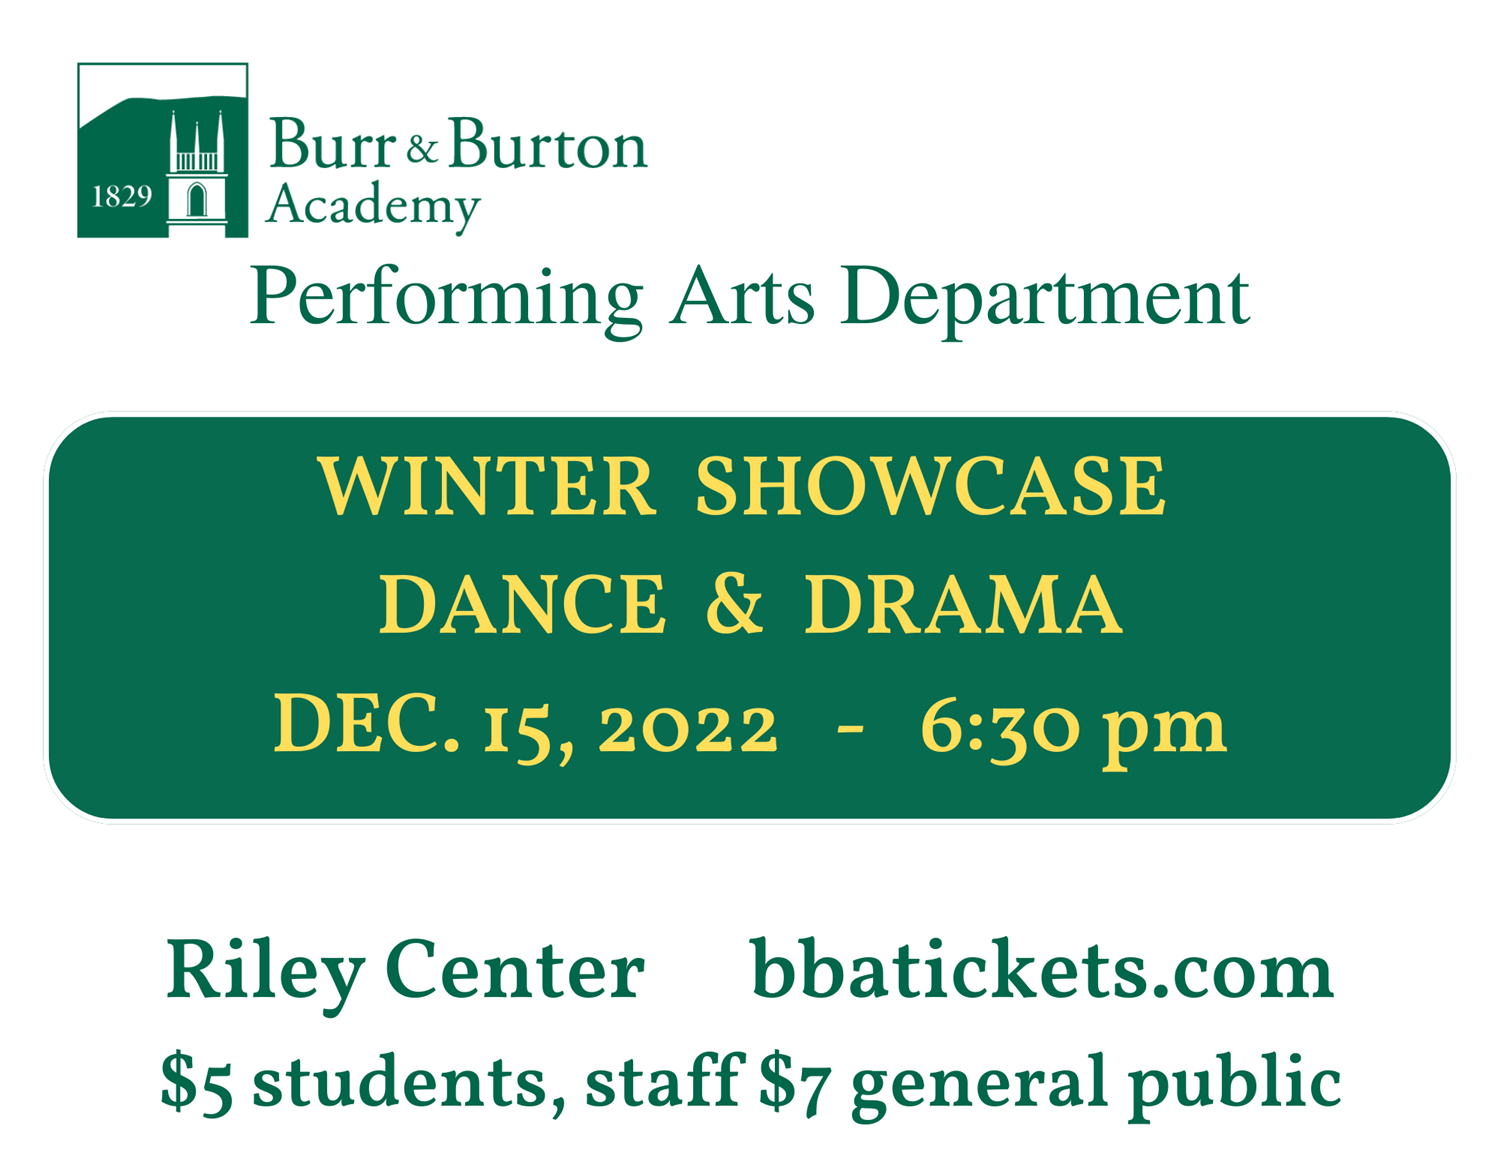 Winter Showcase Dance and Drama BBA Performing Arts Department Showcase on dic. 15, 18:30@BBA Riley Center - Elegir asientoCompra entradas y obtén información enBurr and Burton Academy 